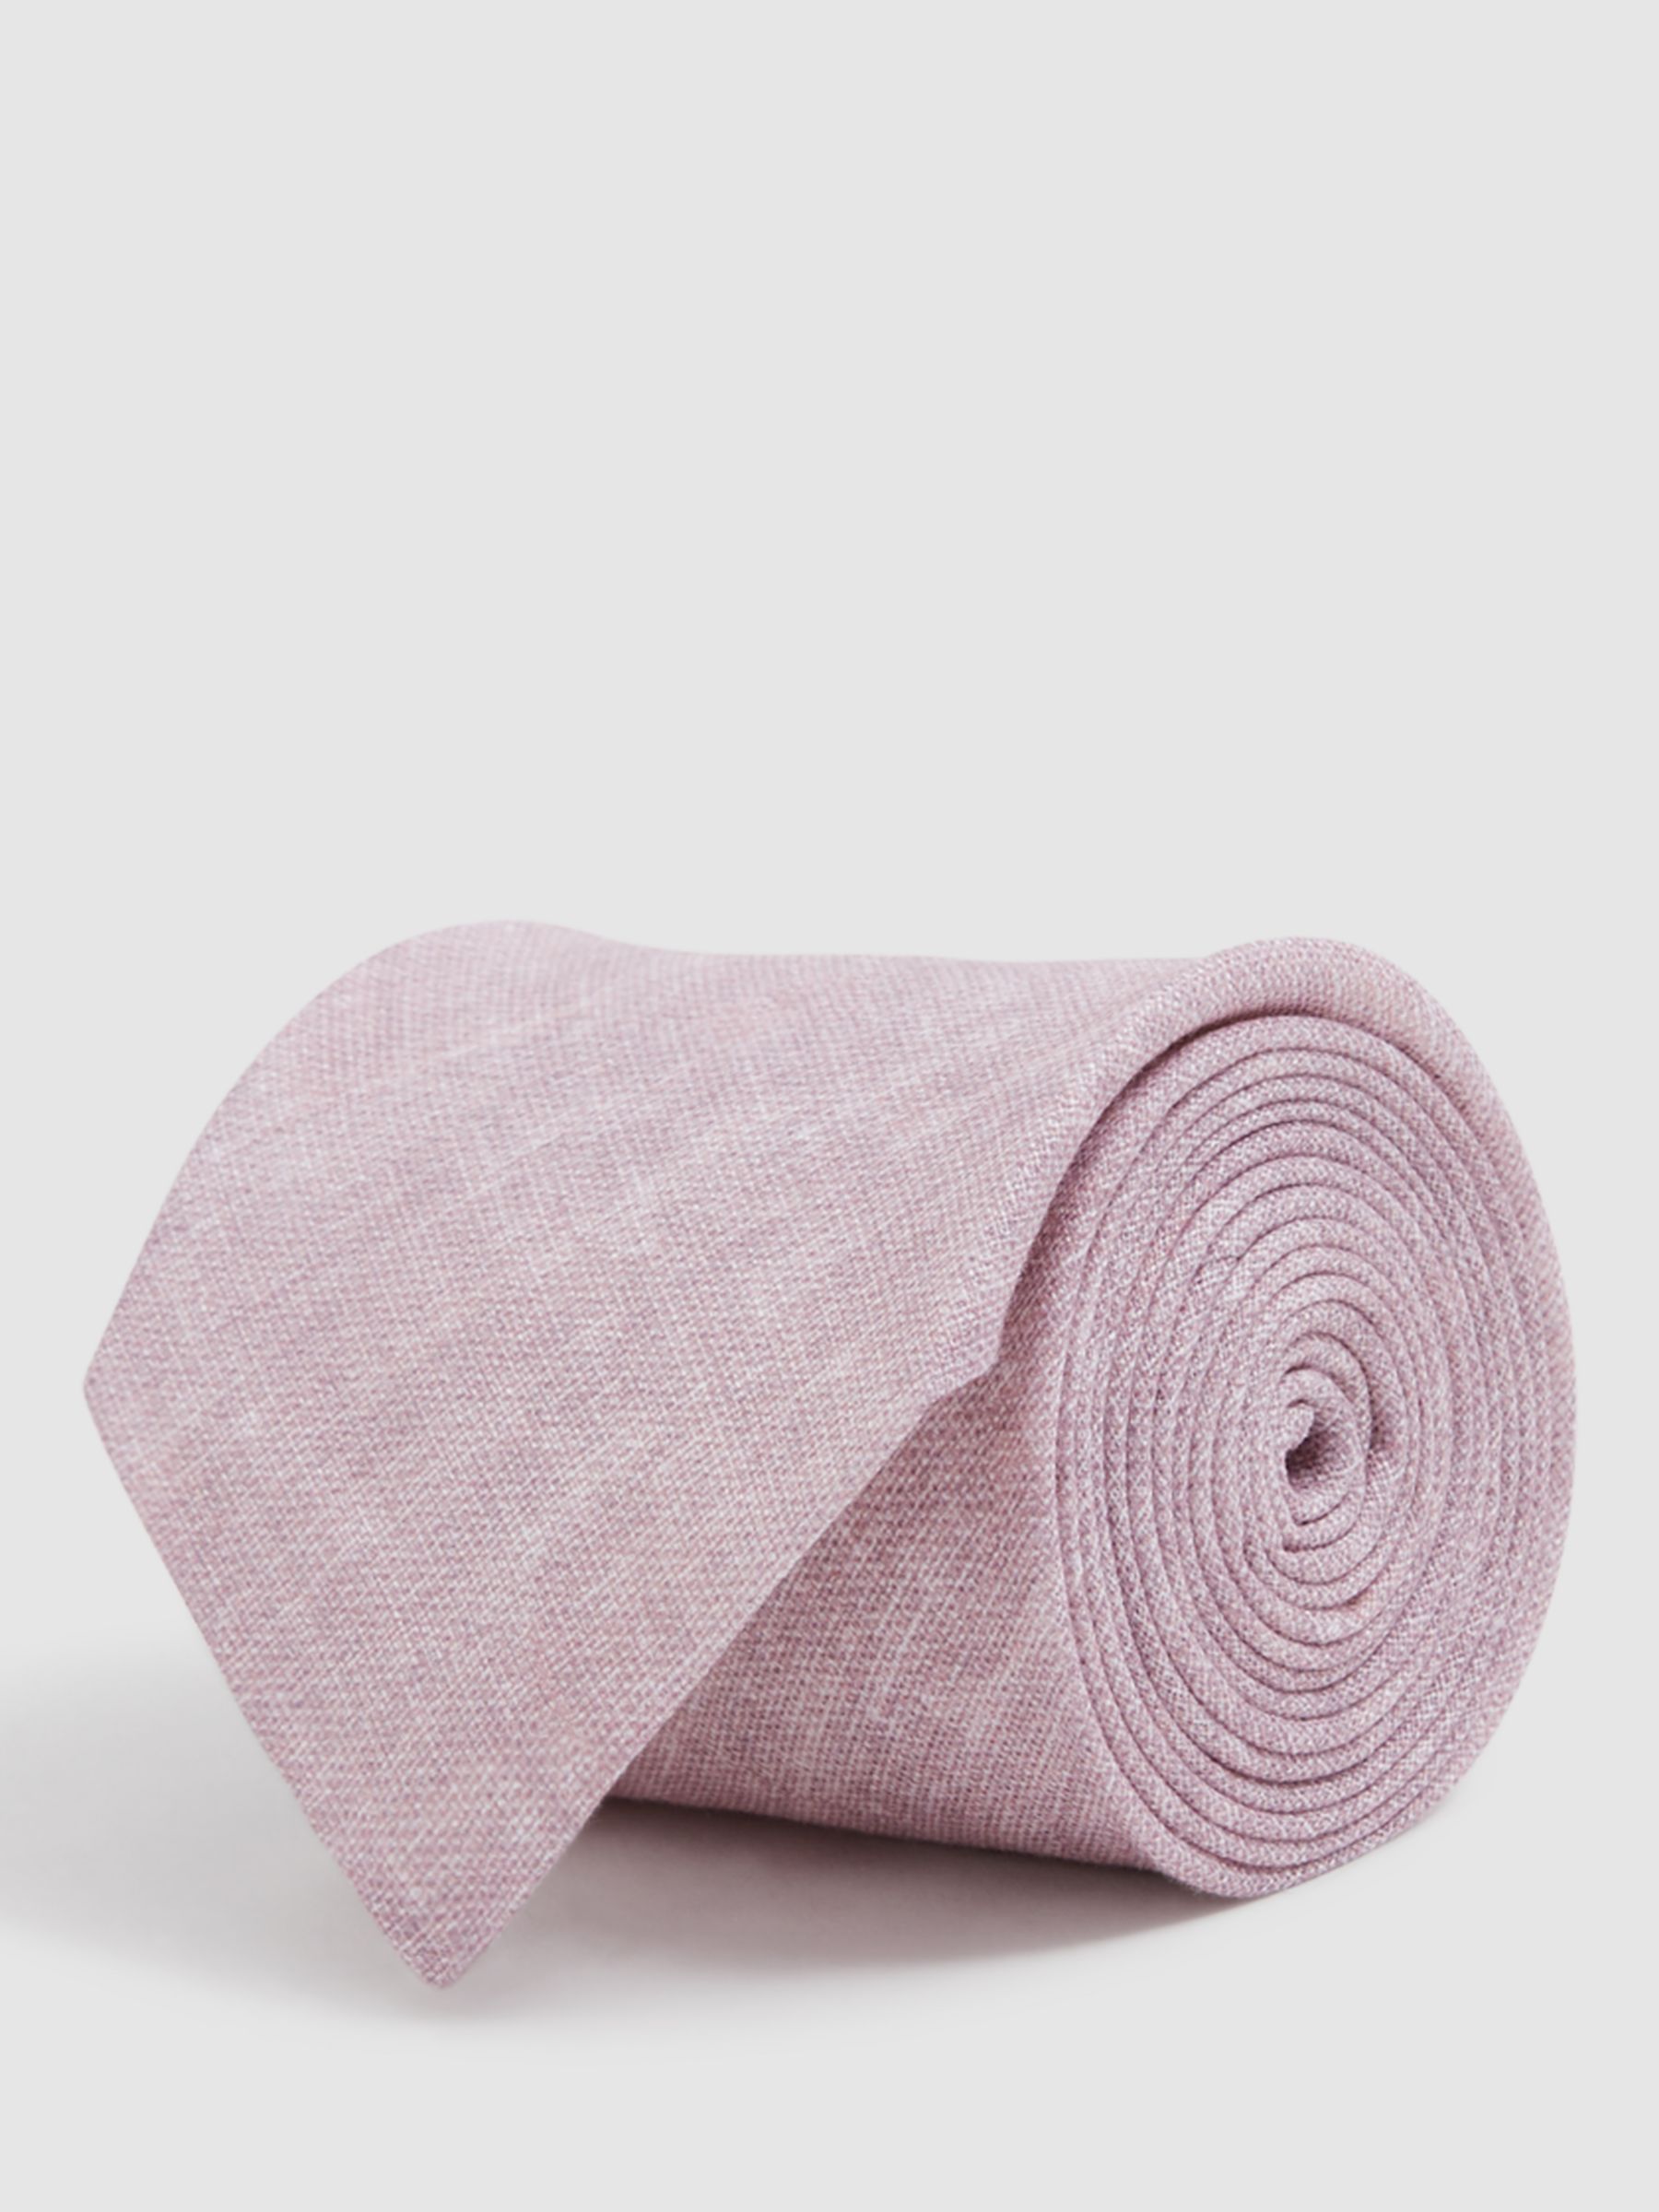 Reiss Vitali Linen Tie, Soft Rose, One Size